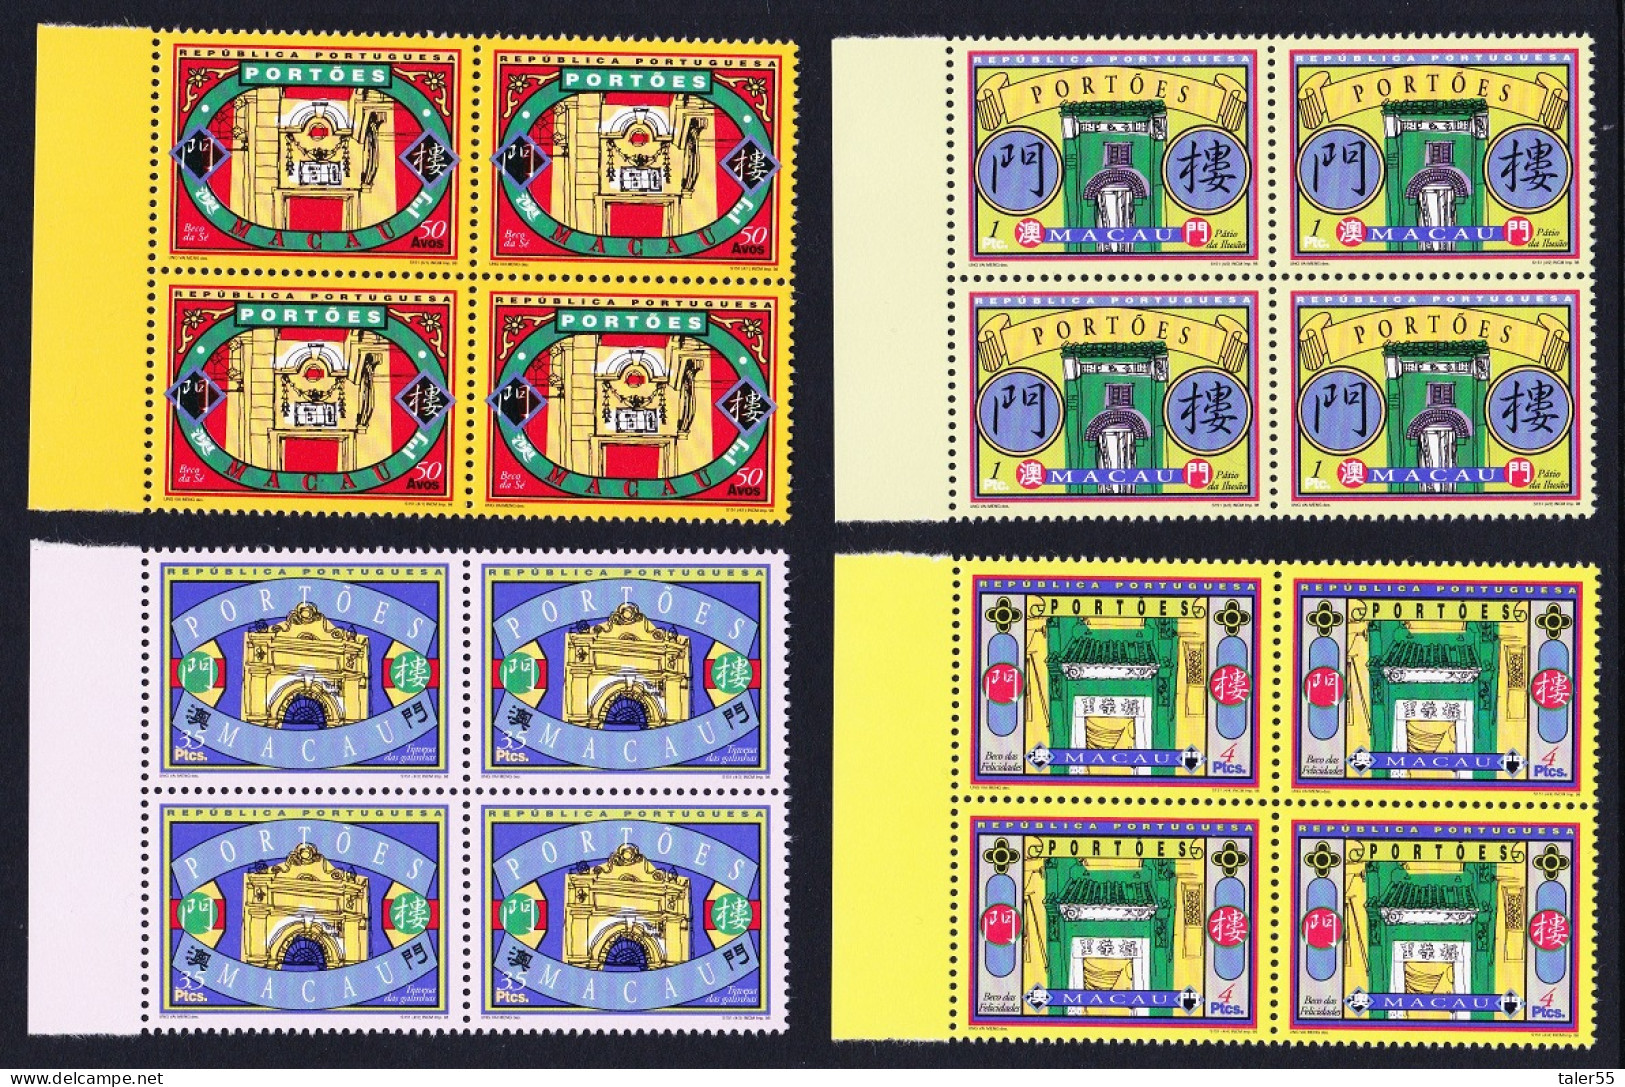 Macao Macau Gateways 4v Blocks Of 4 Margins 1998 MNH SG#1030-1033 MI#955-958 Sc#916-919 - Unused Stamps